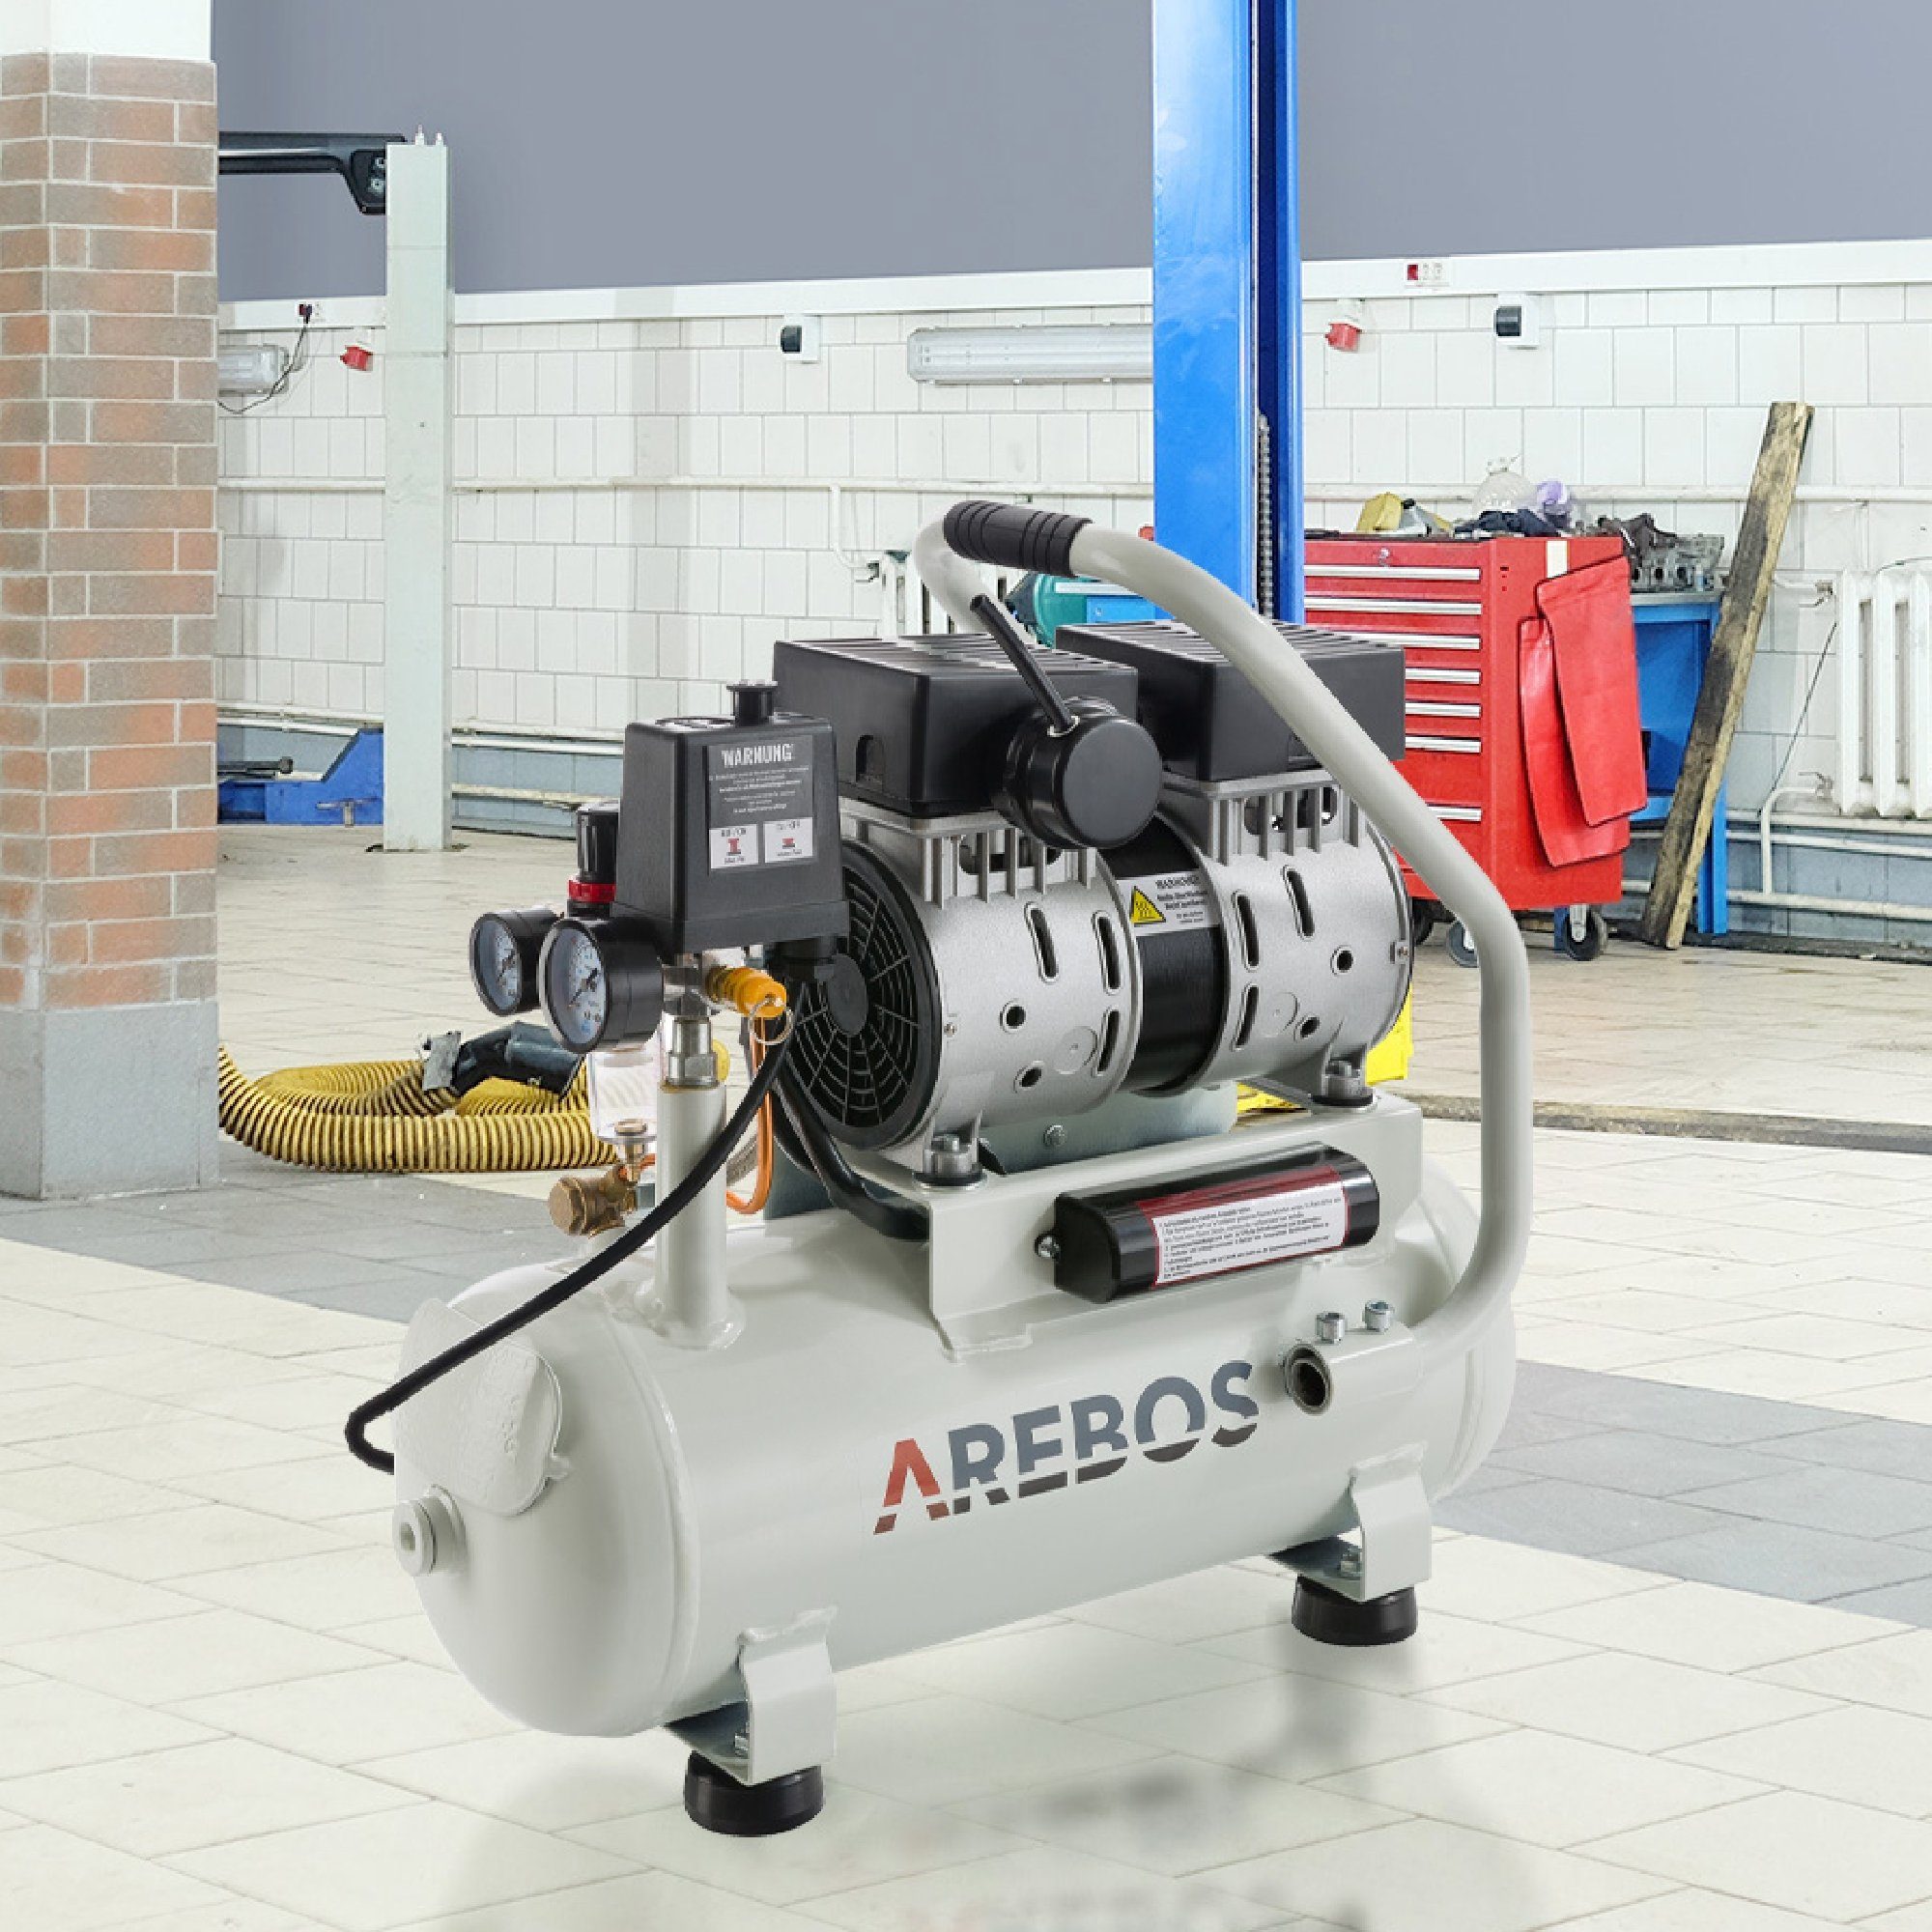 Arebos Kompressor Flüsterkompressor Druckluft Kompressor 500W Kompressor Kompressor, W Druckluft 12l, 500